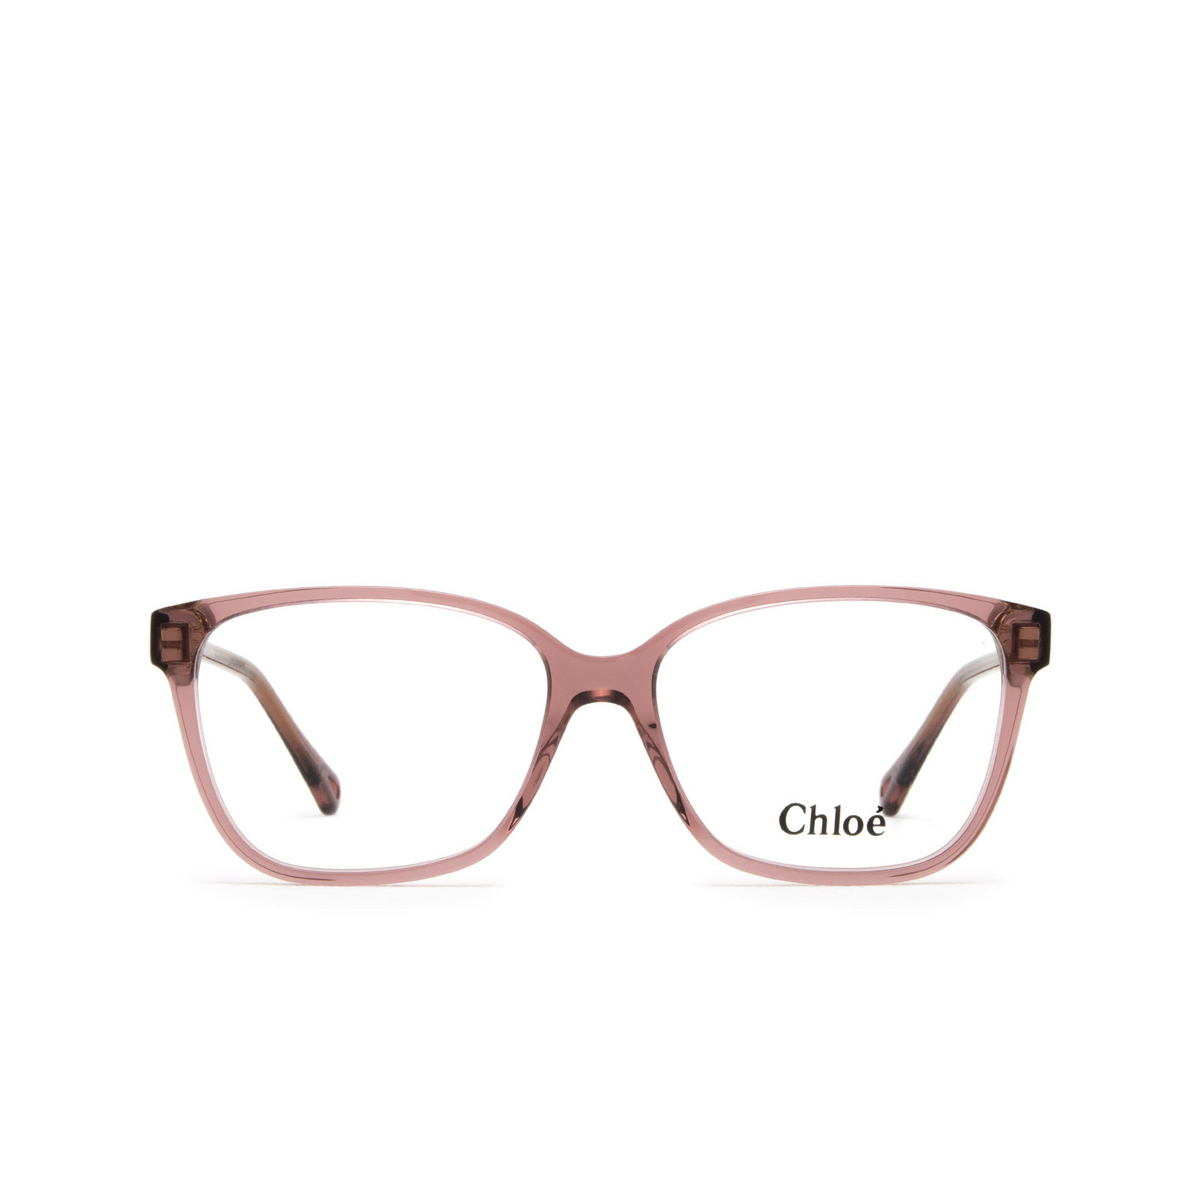 Chloé® Rectangle Eyeglasses: CH0115O color Transparent Pink 004 - front view.